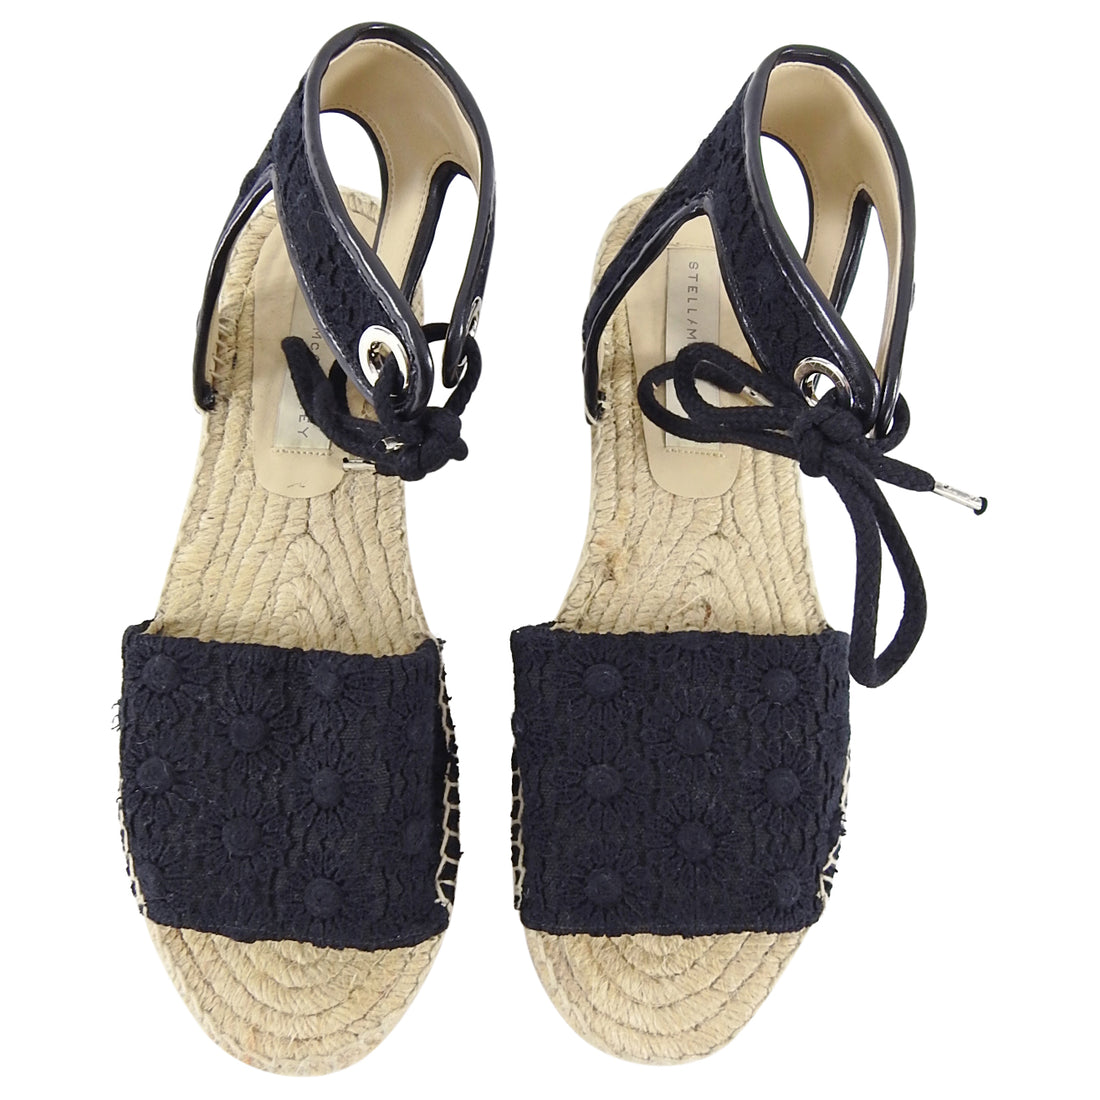 Stella McCartney Black Floral Crochet Flat Espadrille Sandals - 39.5 / 9